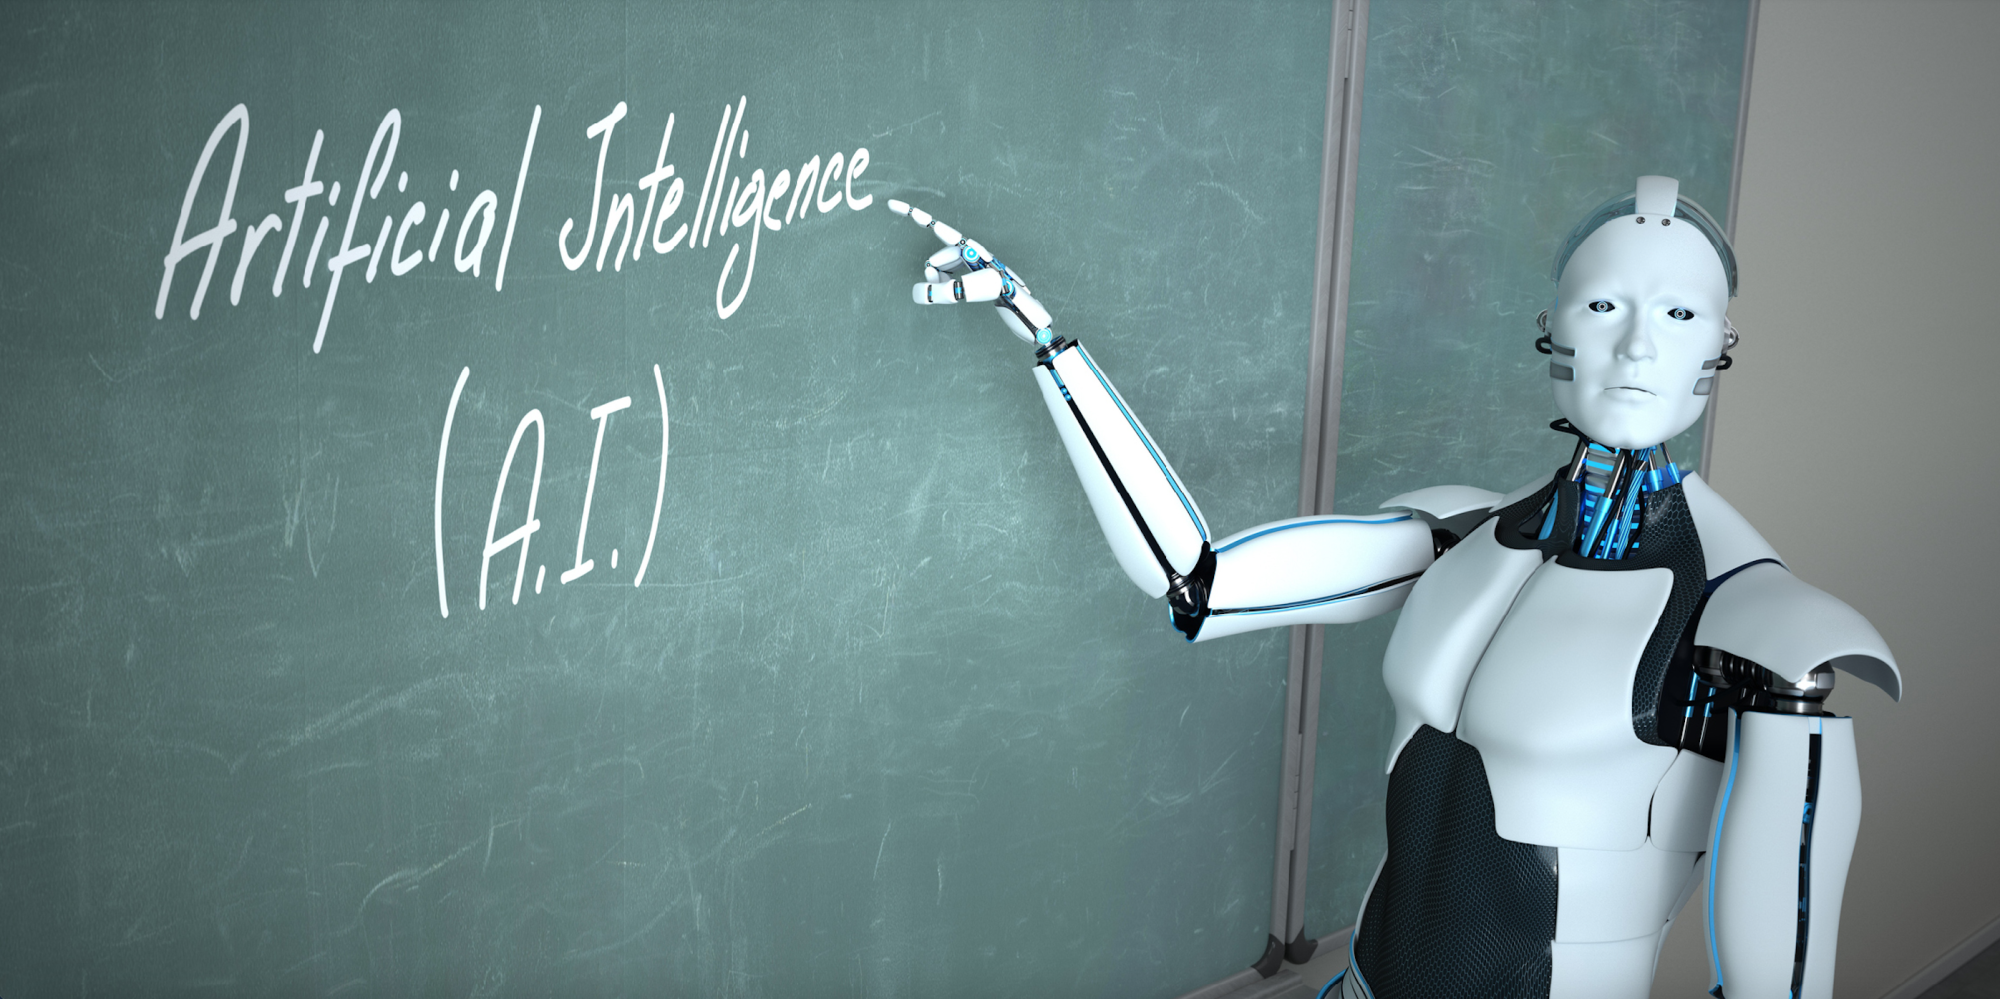 Robot pointing at blackboard